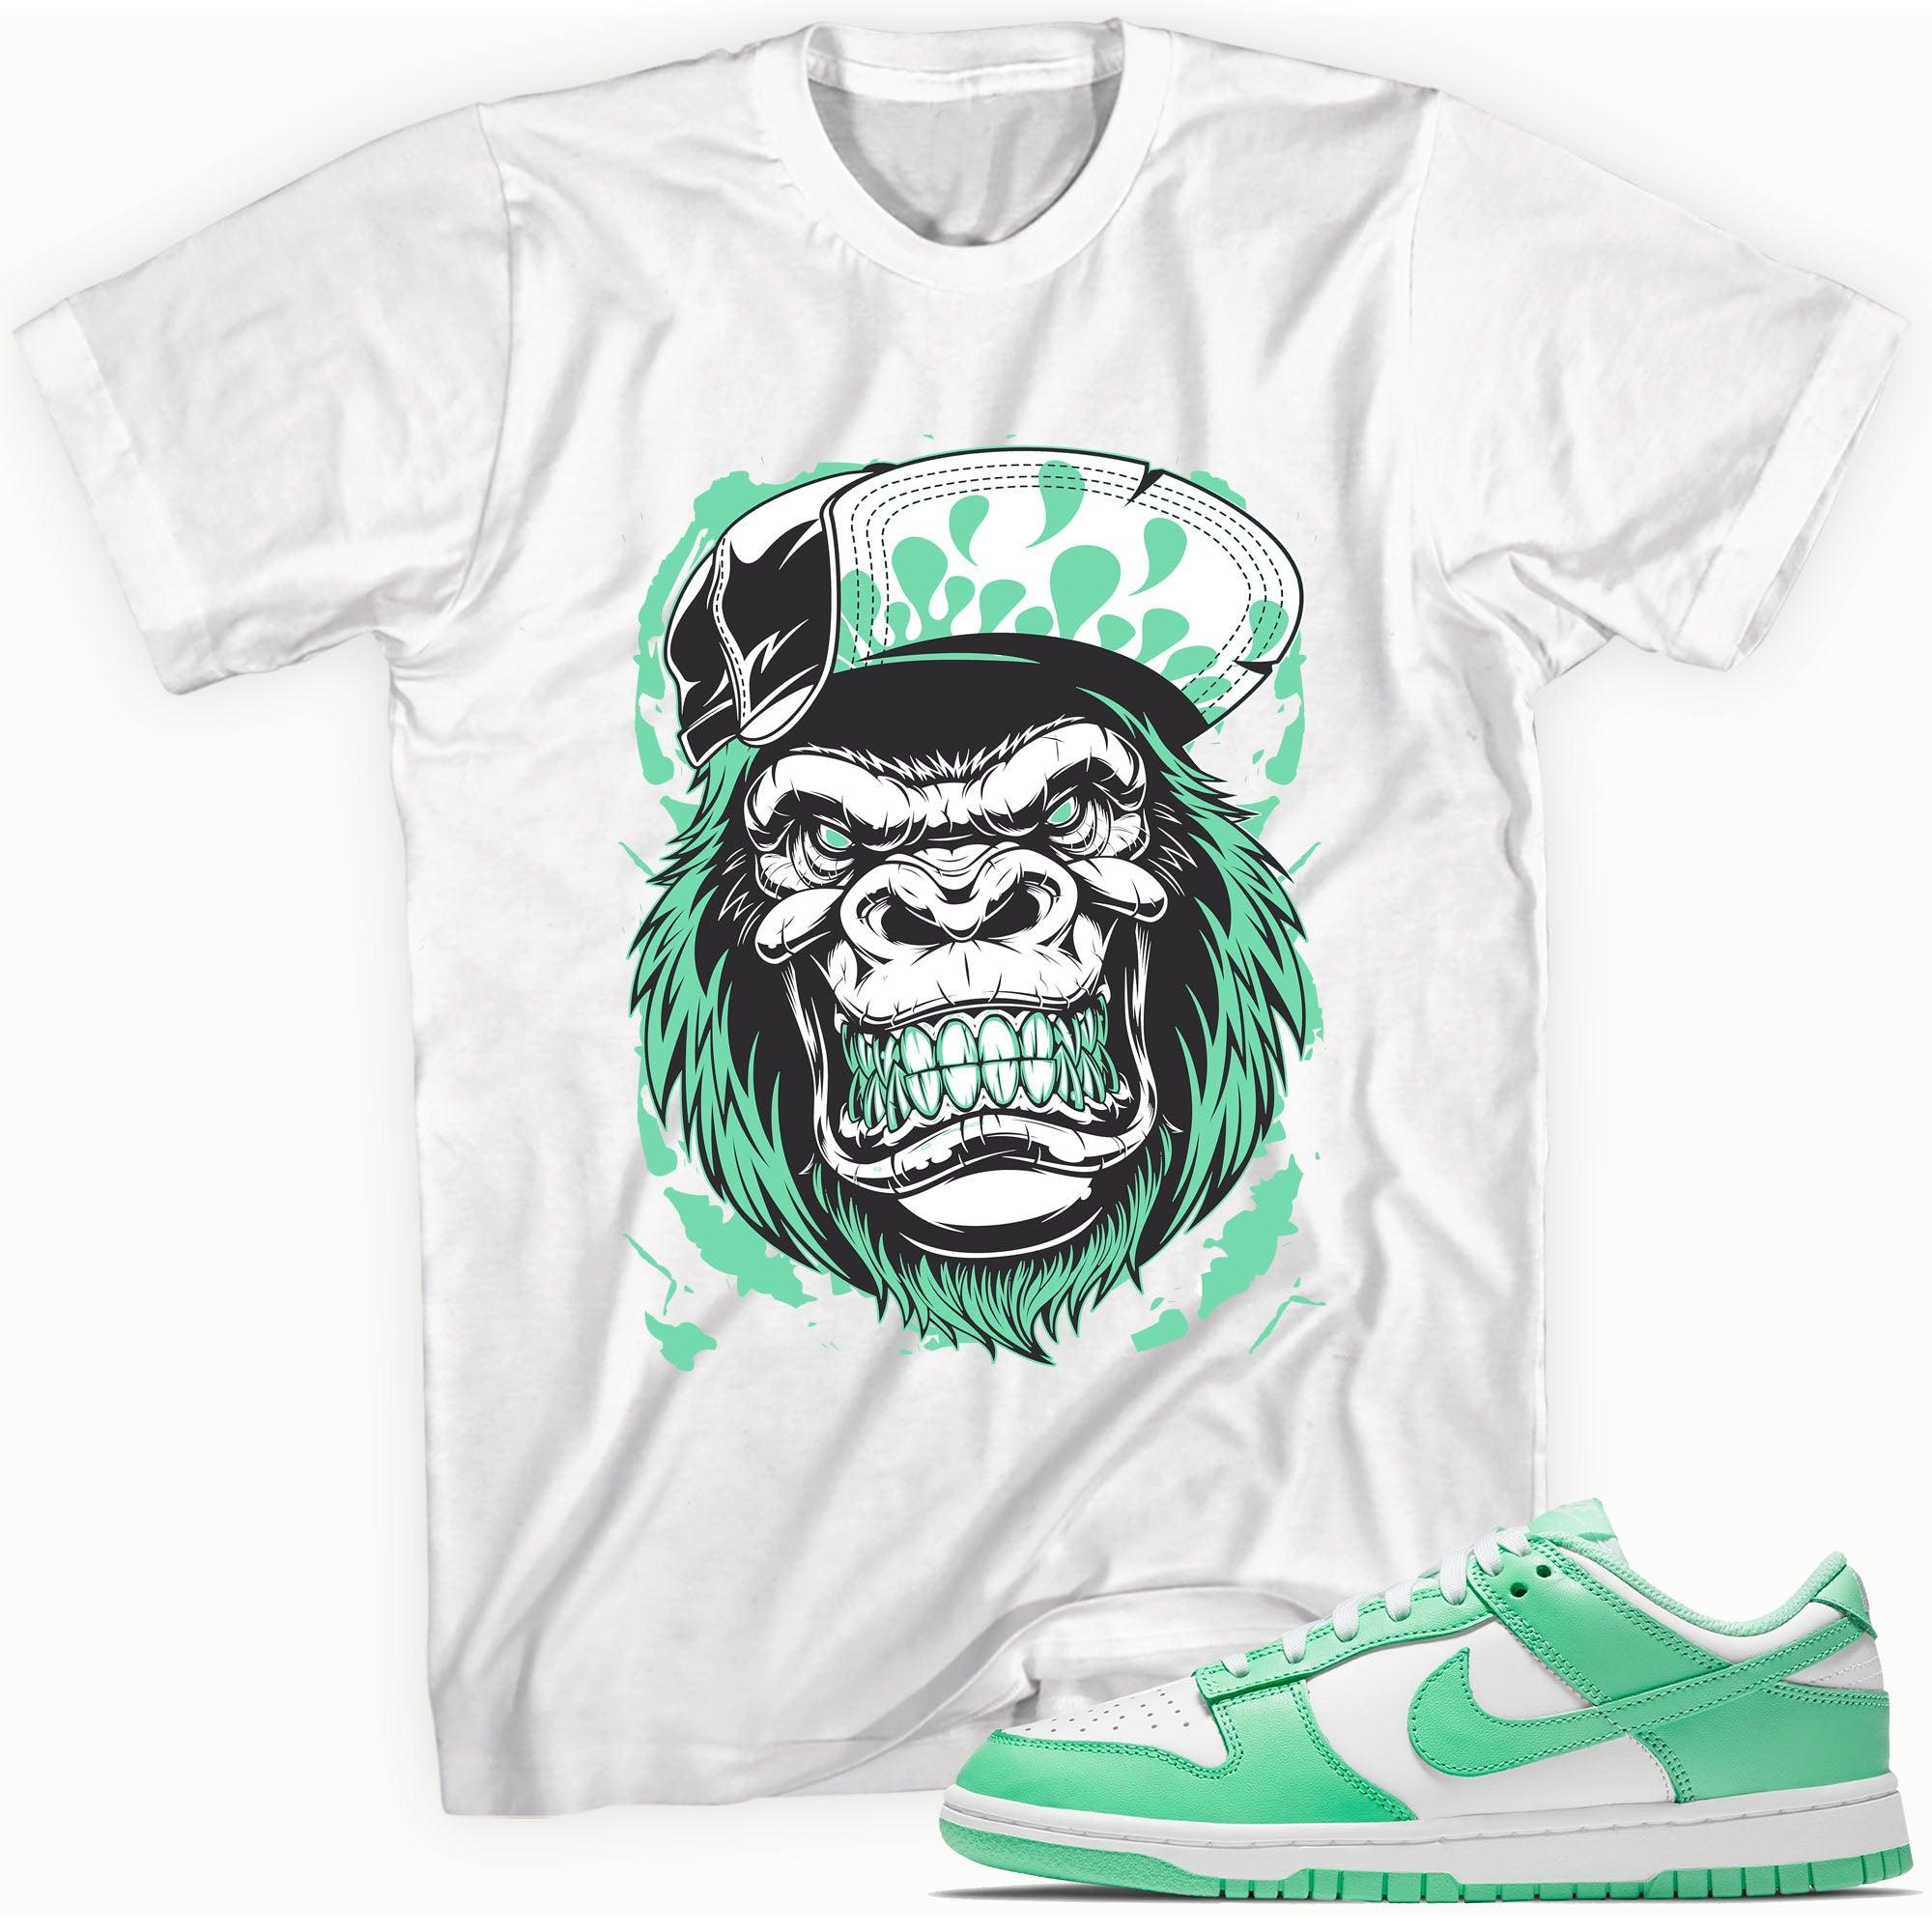 Gorilla Beast Shirt Nike Dunks Low Green Glow photo